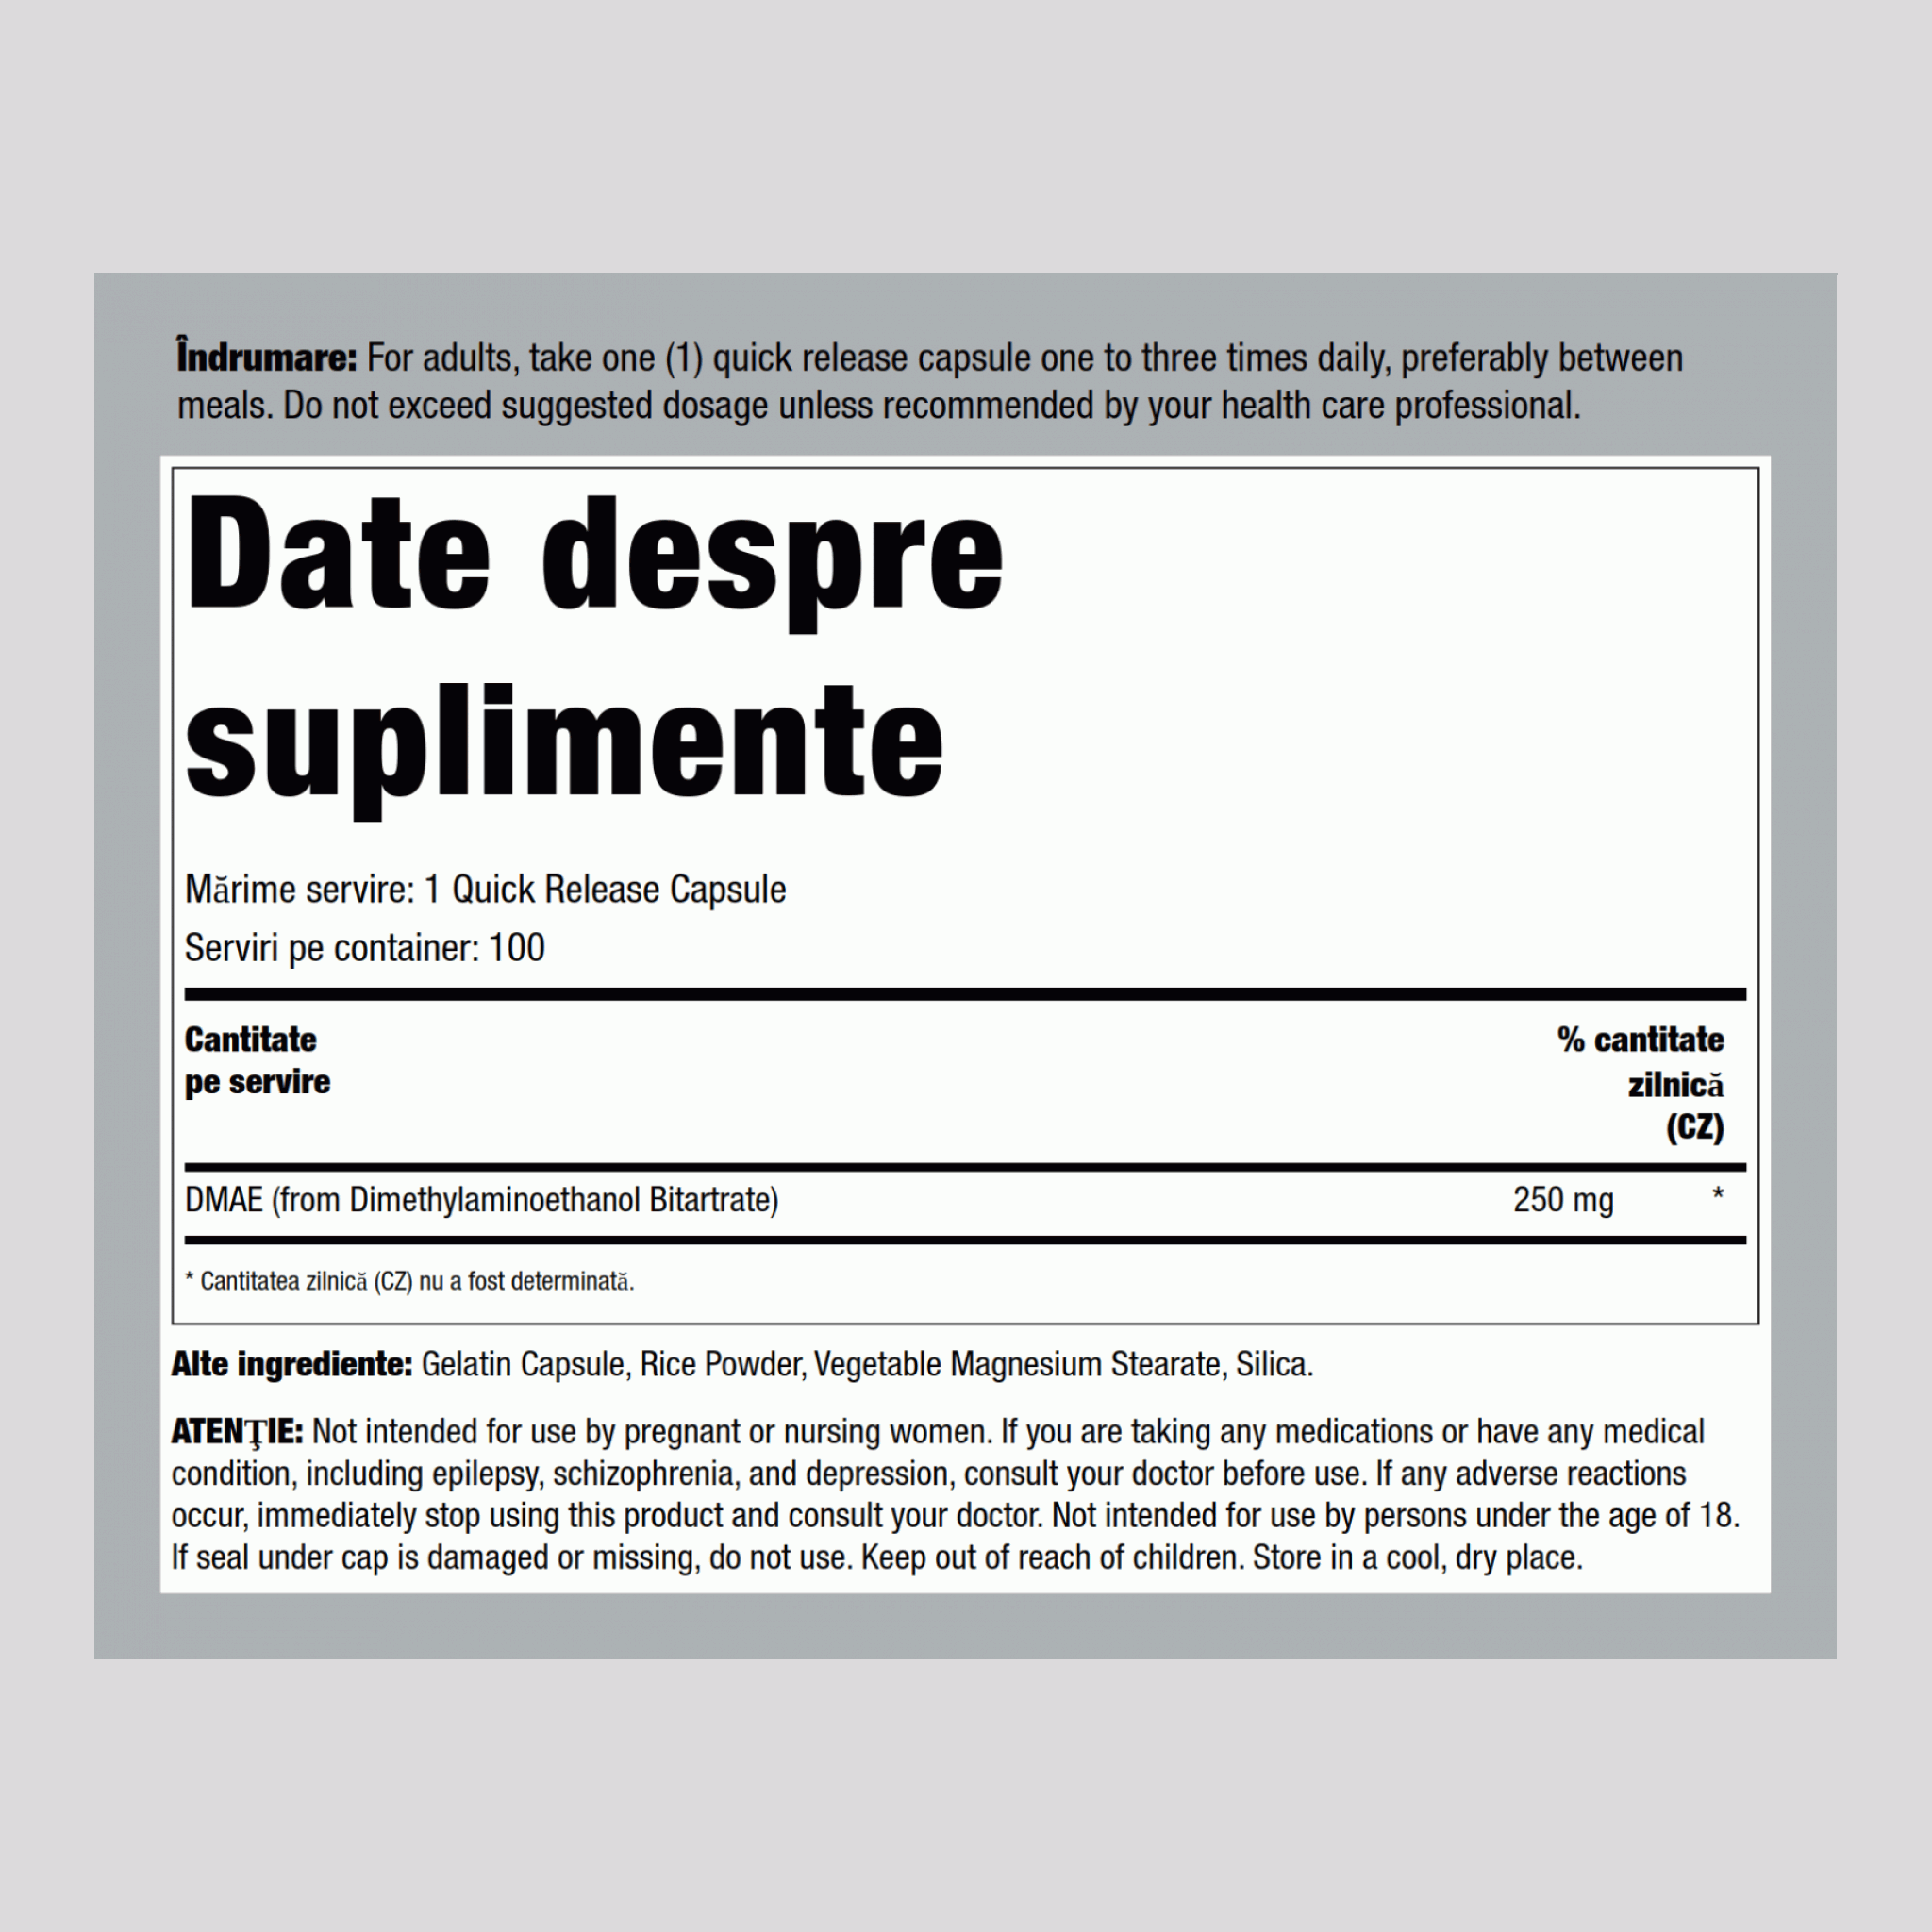 DMAE (Dimethylaminoethanol) 250 mg 100 Capsule cu eliberare rapidă     